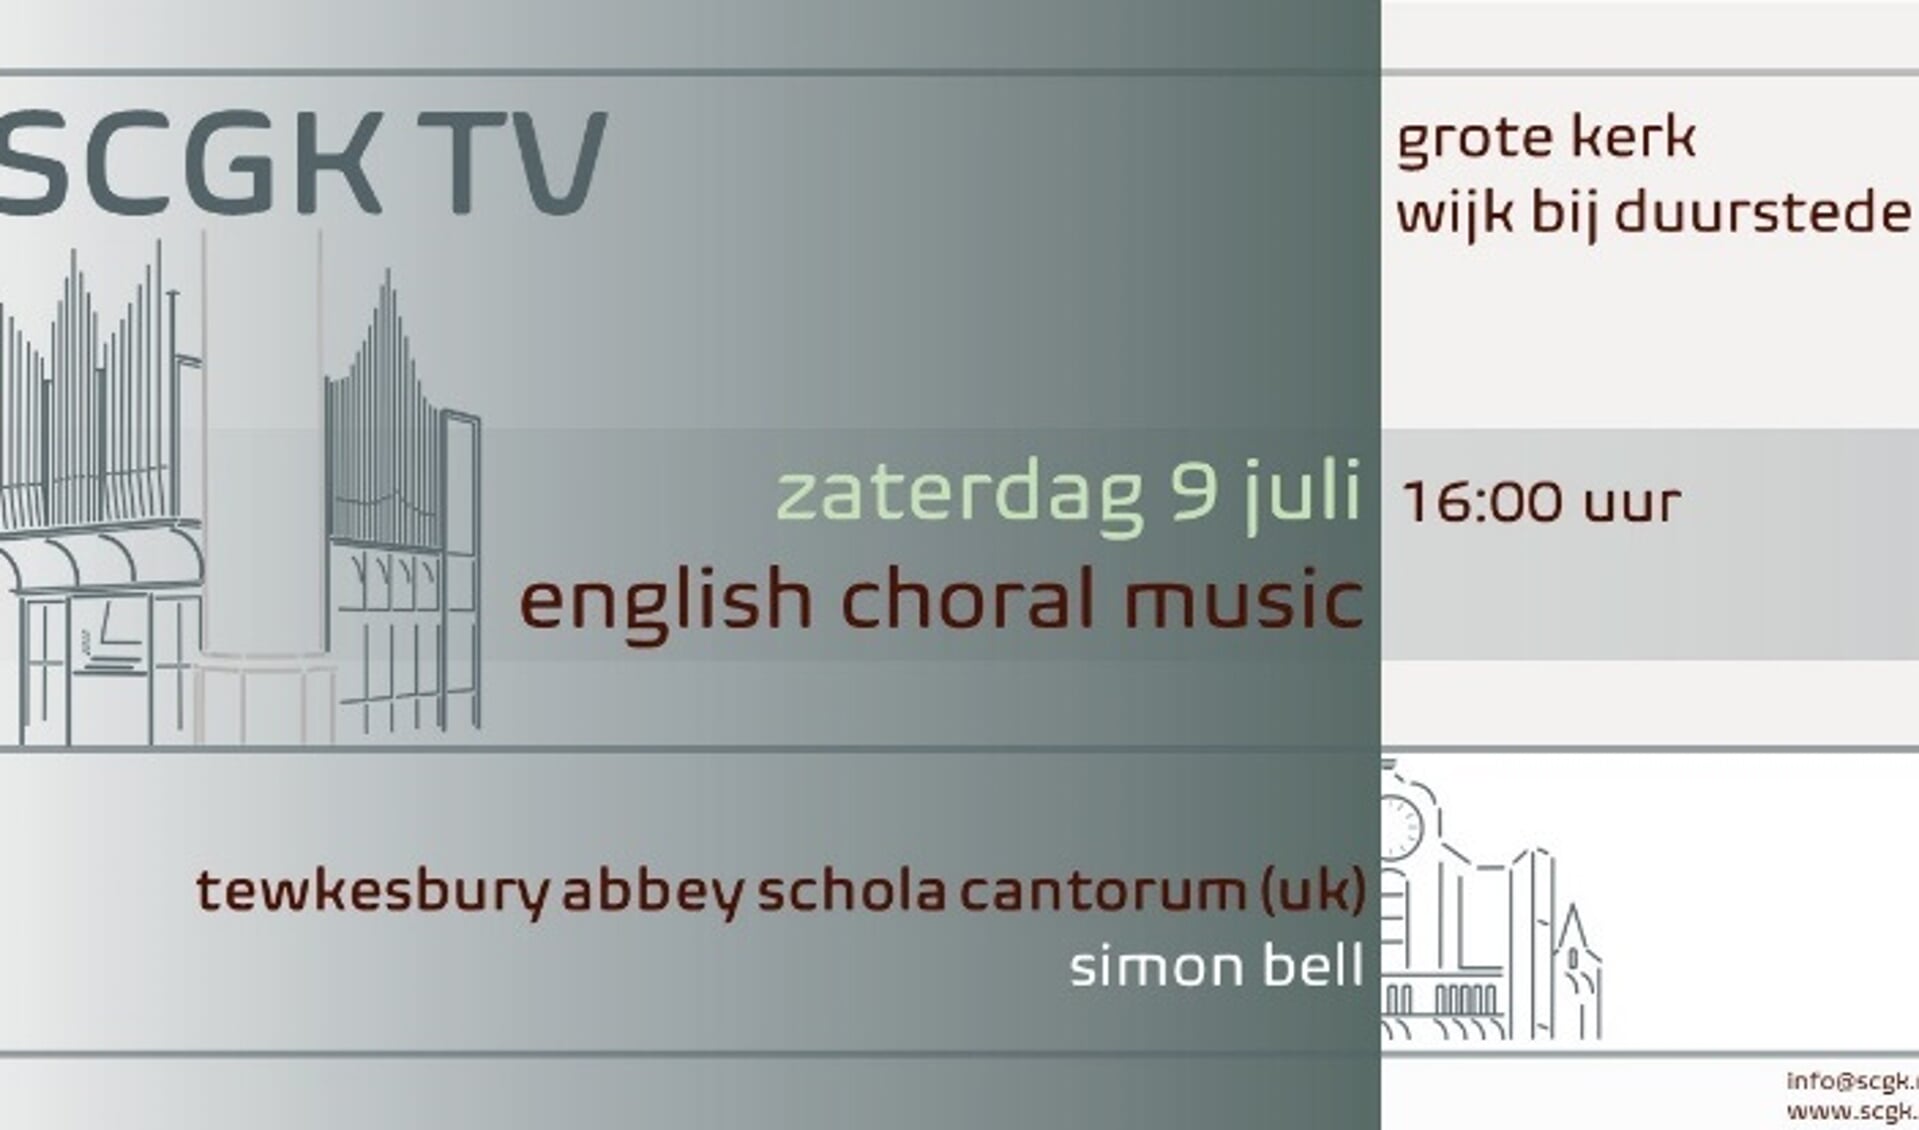 Tewkesbury Abbey Schola Cantorum